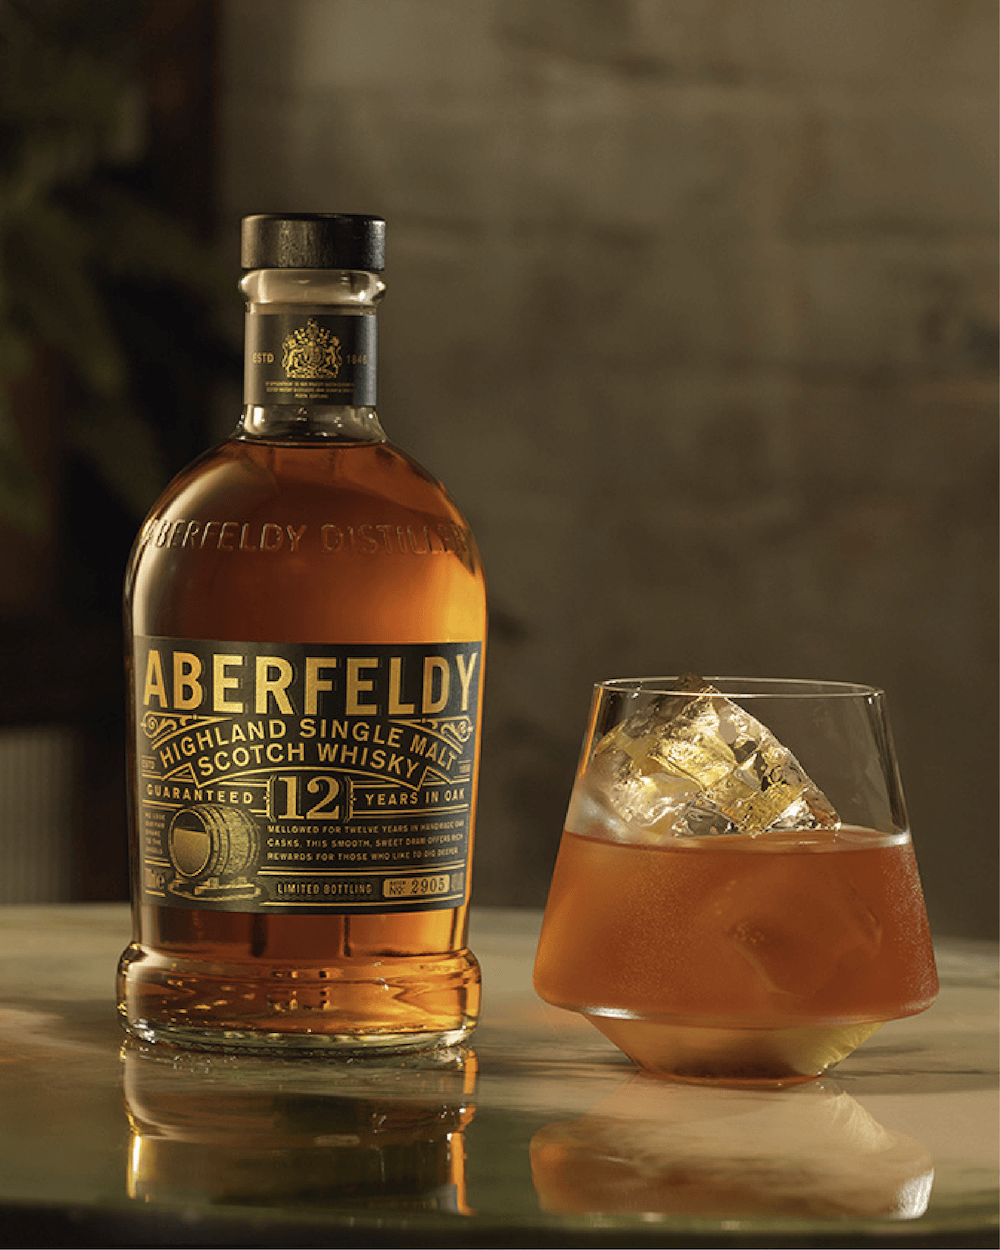 Aberfeldy Whisky bottle